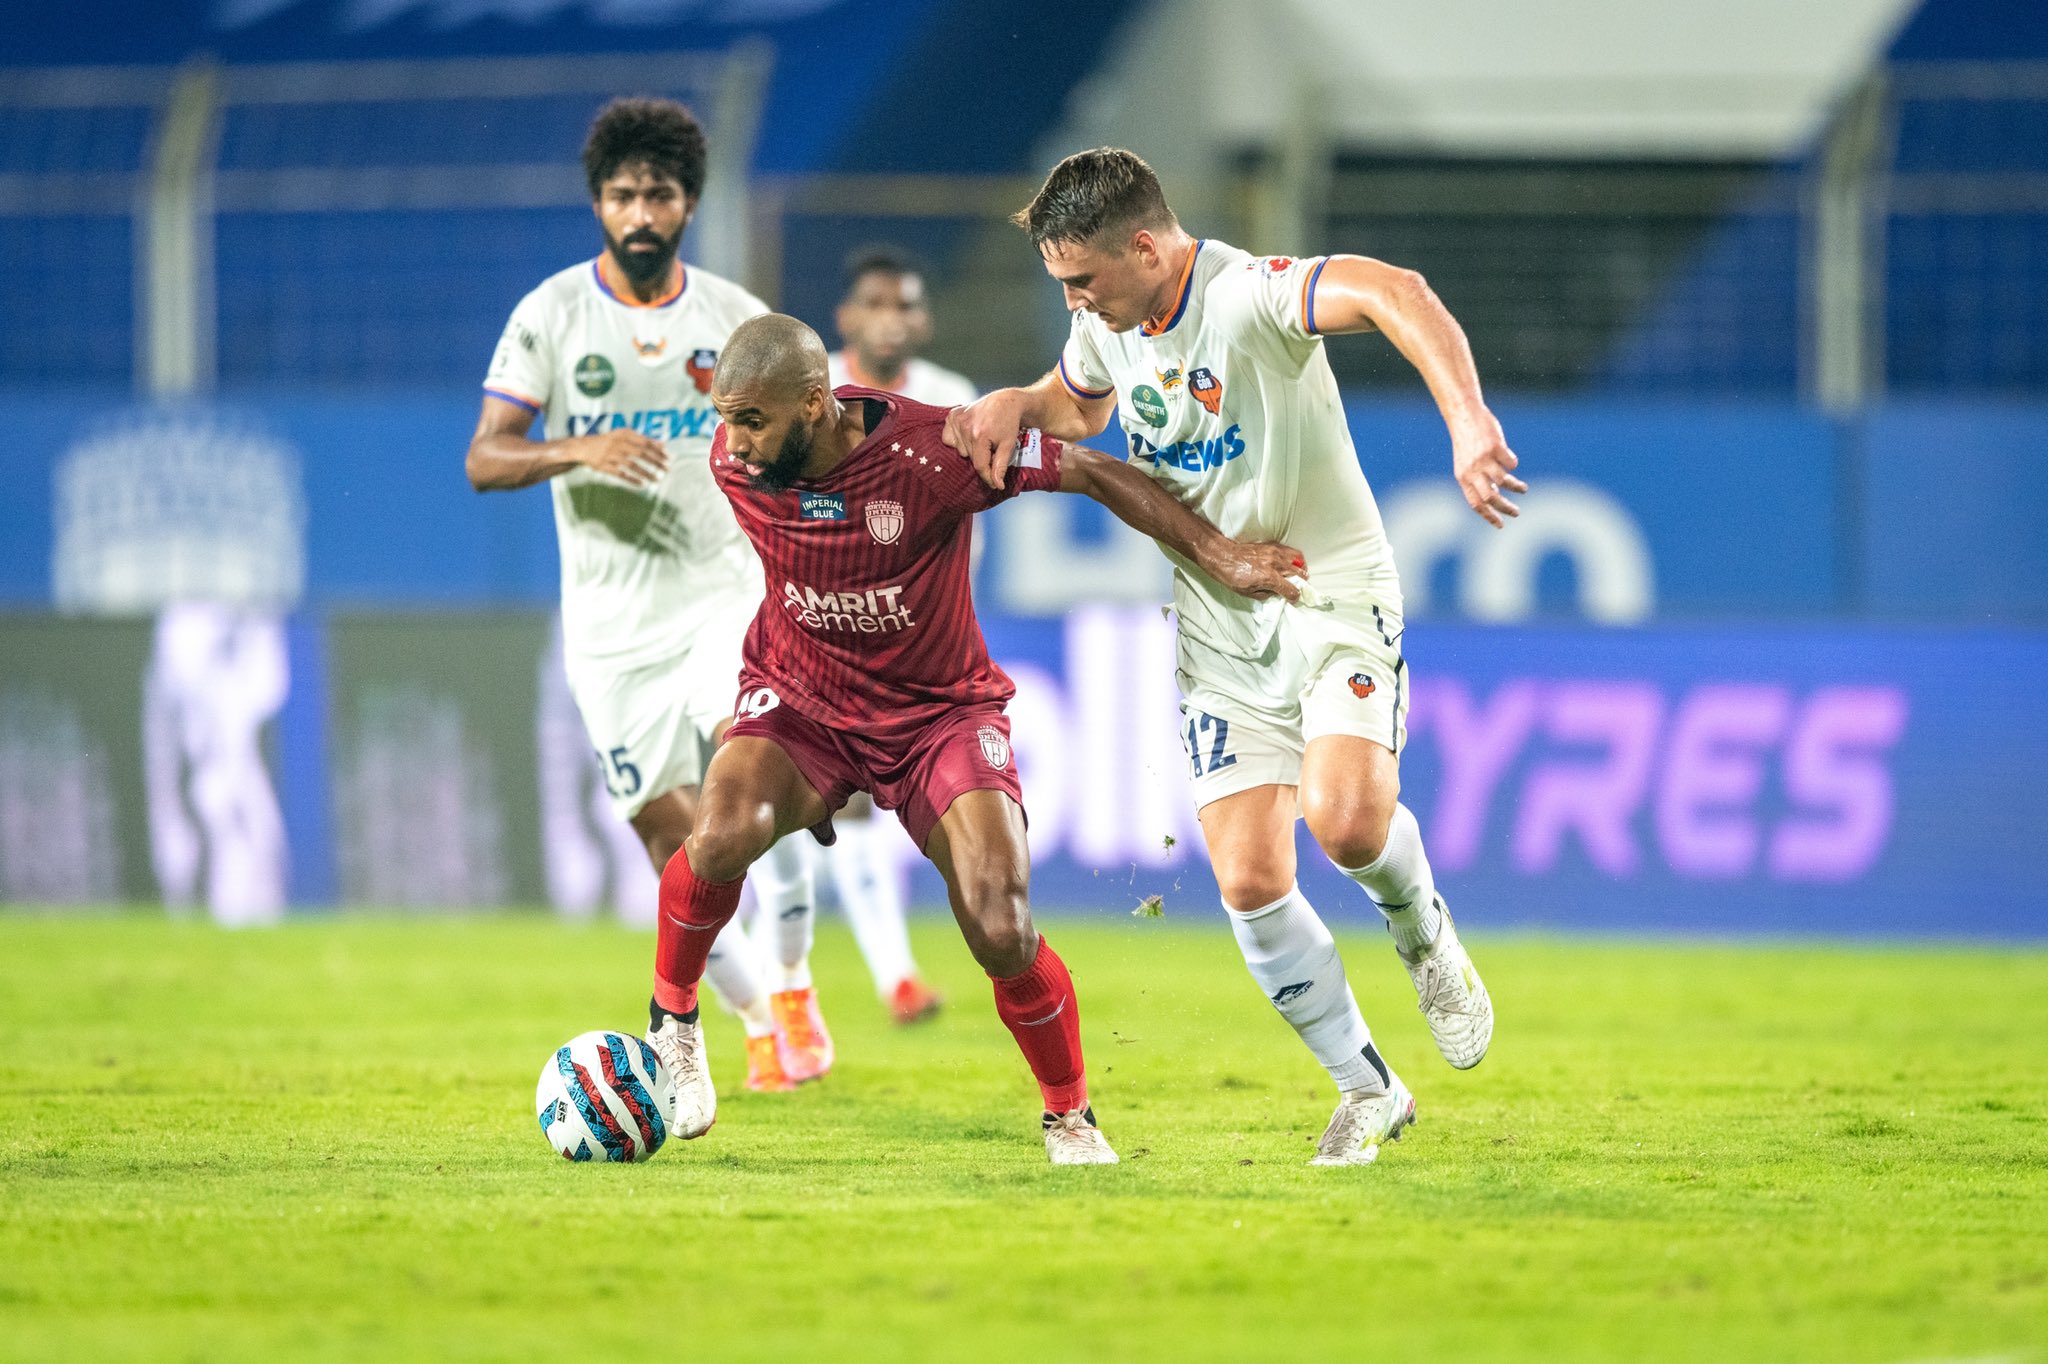 ISL 2021:22 Camara’s last gasp goal helps NorthEast United snatch all three points against FC Goa in a thriller